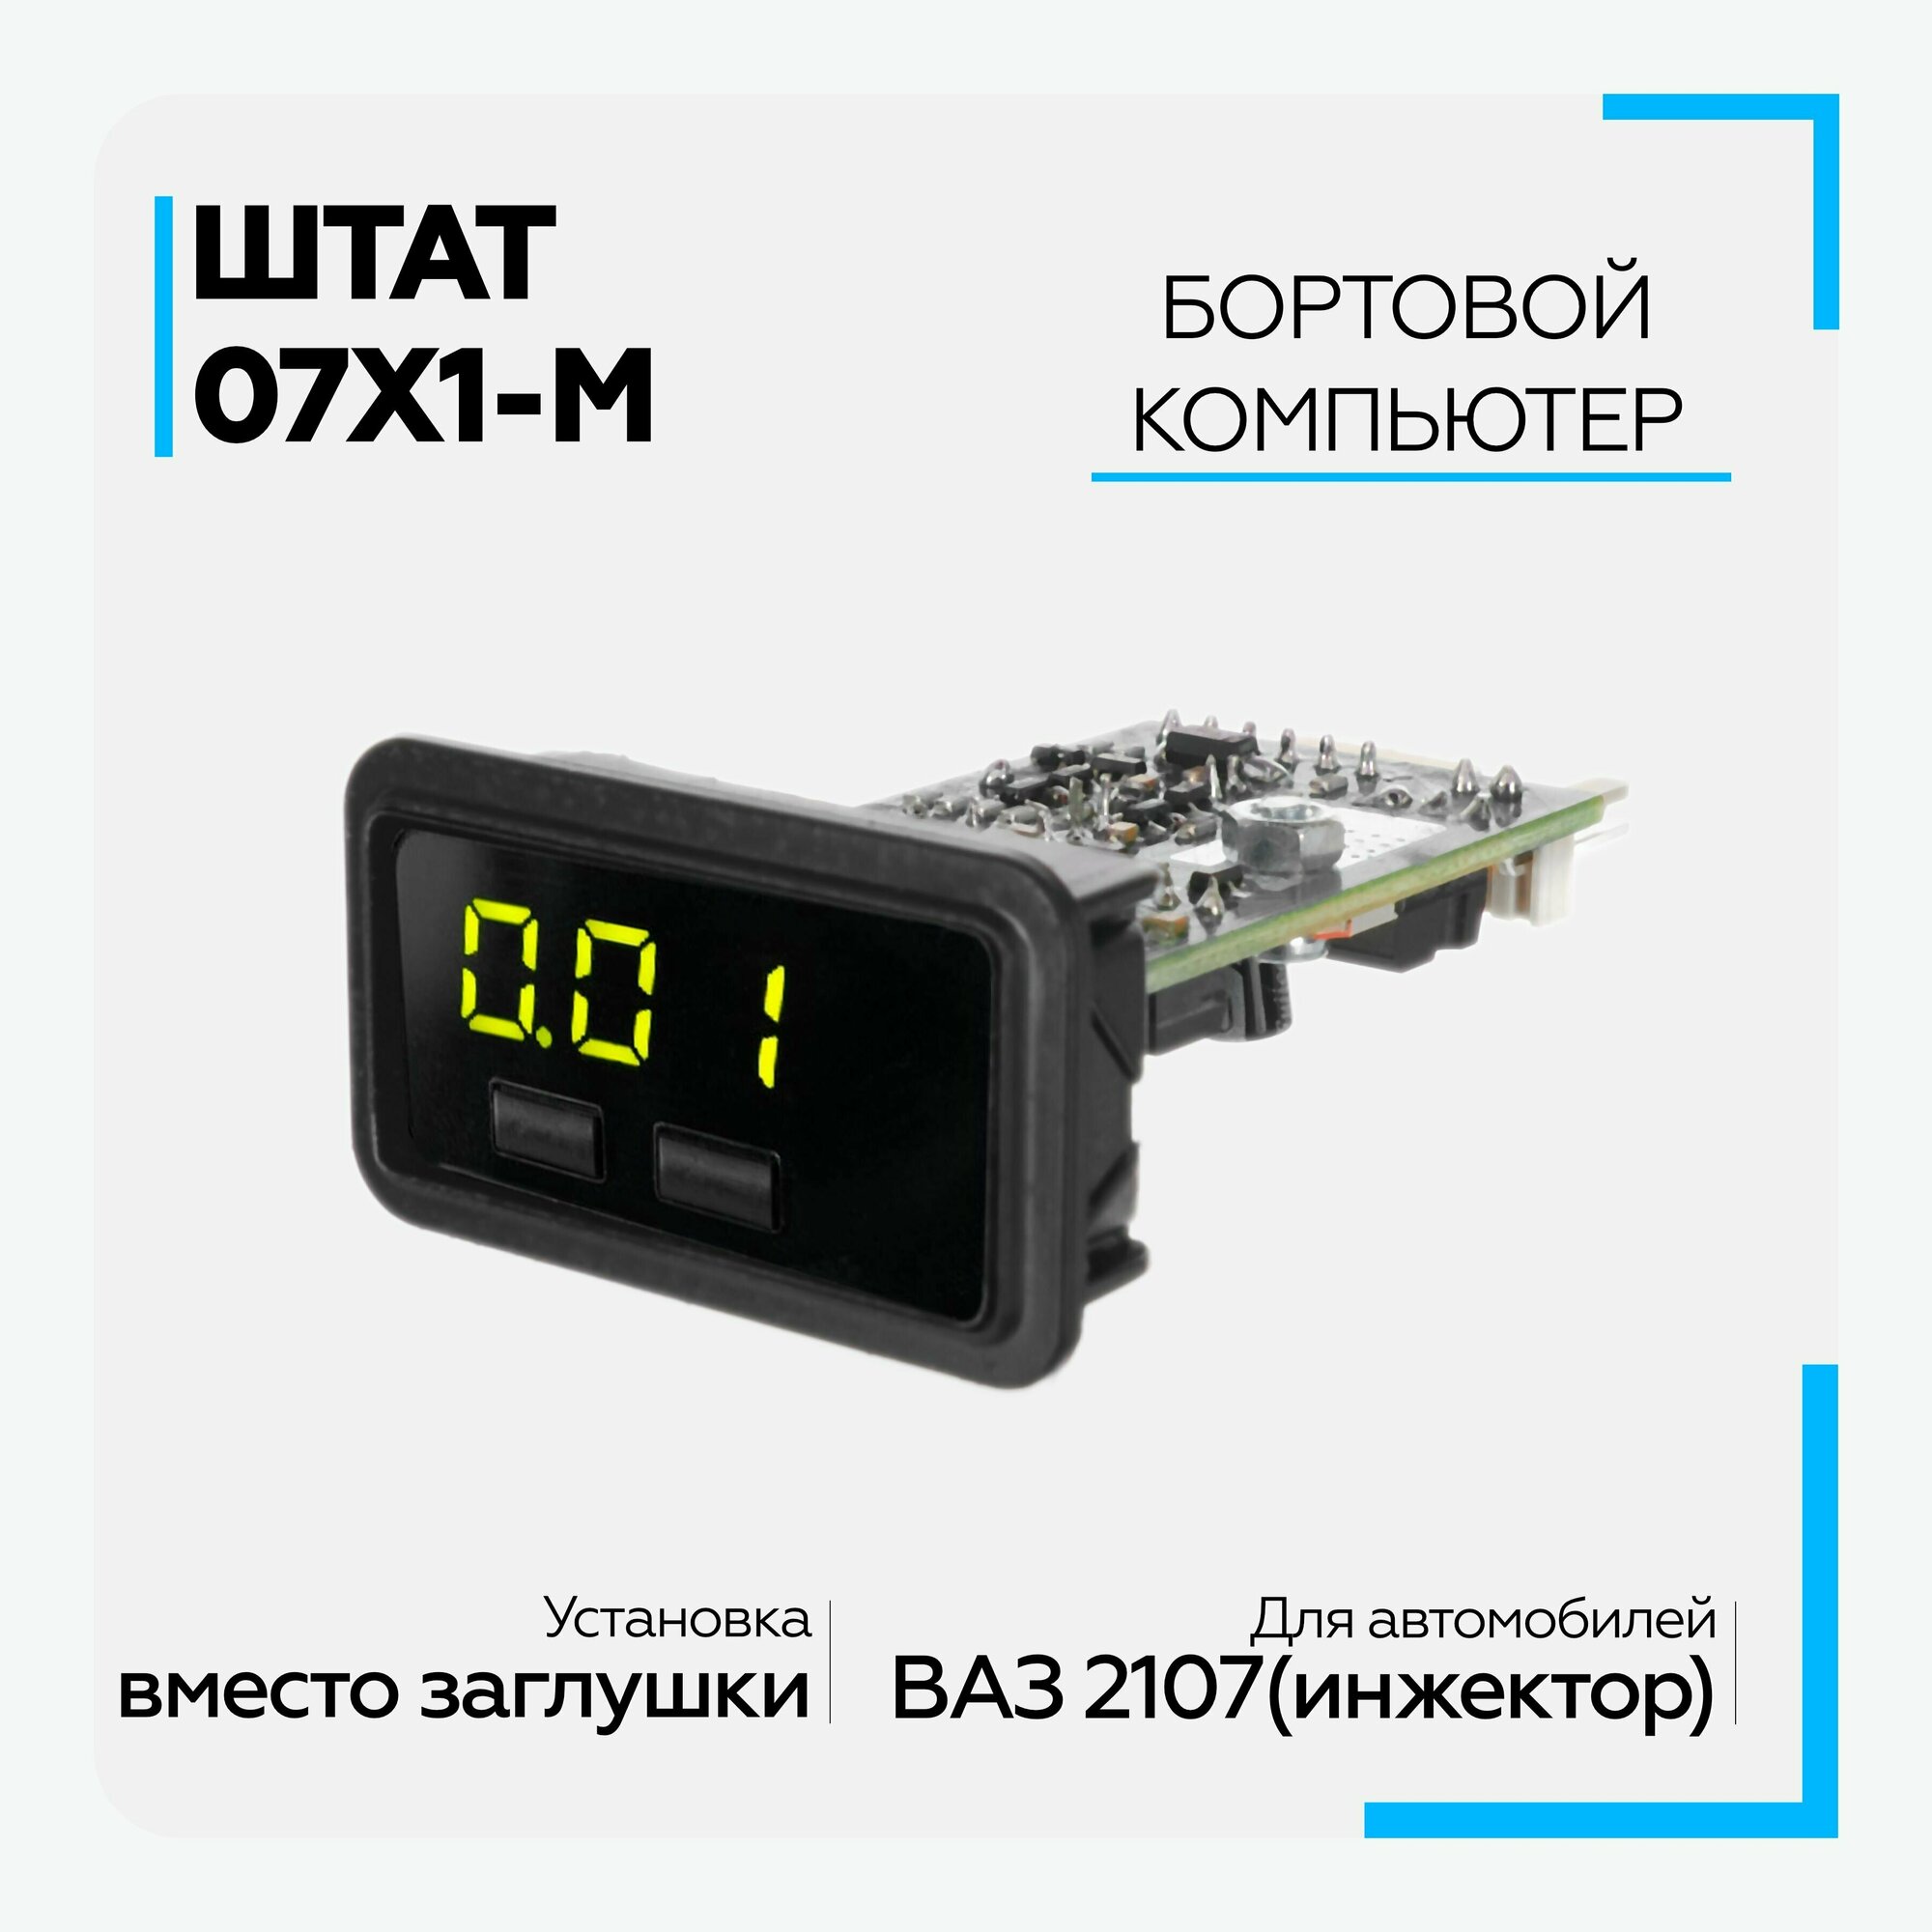 Бортовой компьютер Штат 07Х1-М инжектор ВАЗ 2107 2105 ВАЗ Классика